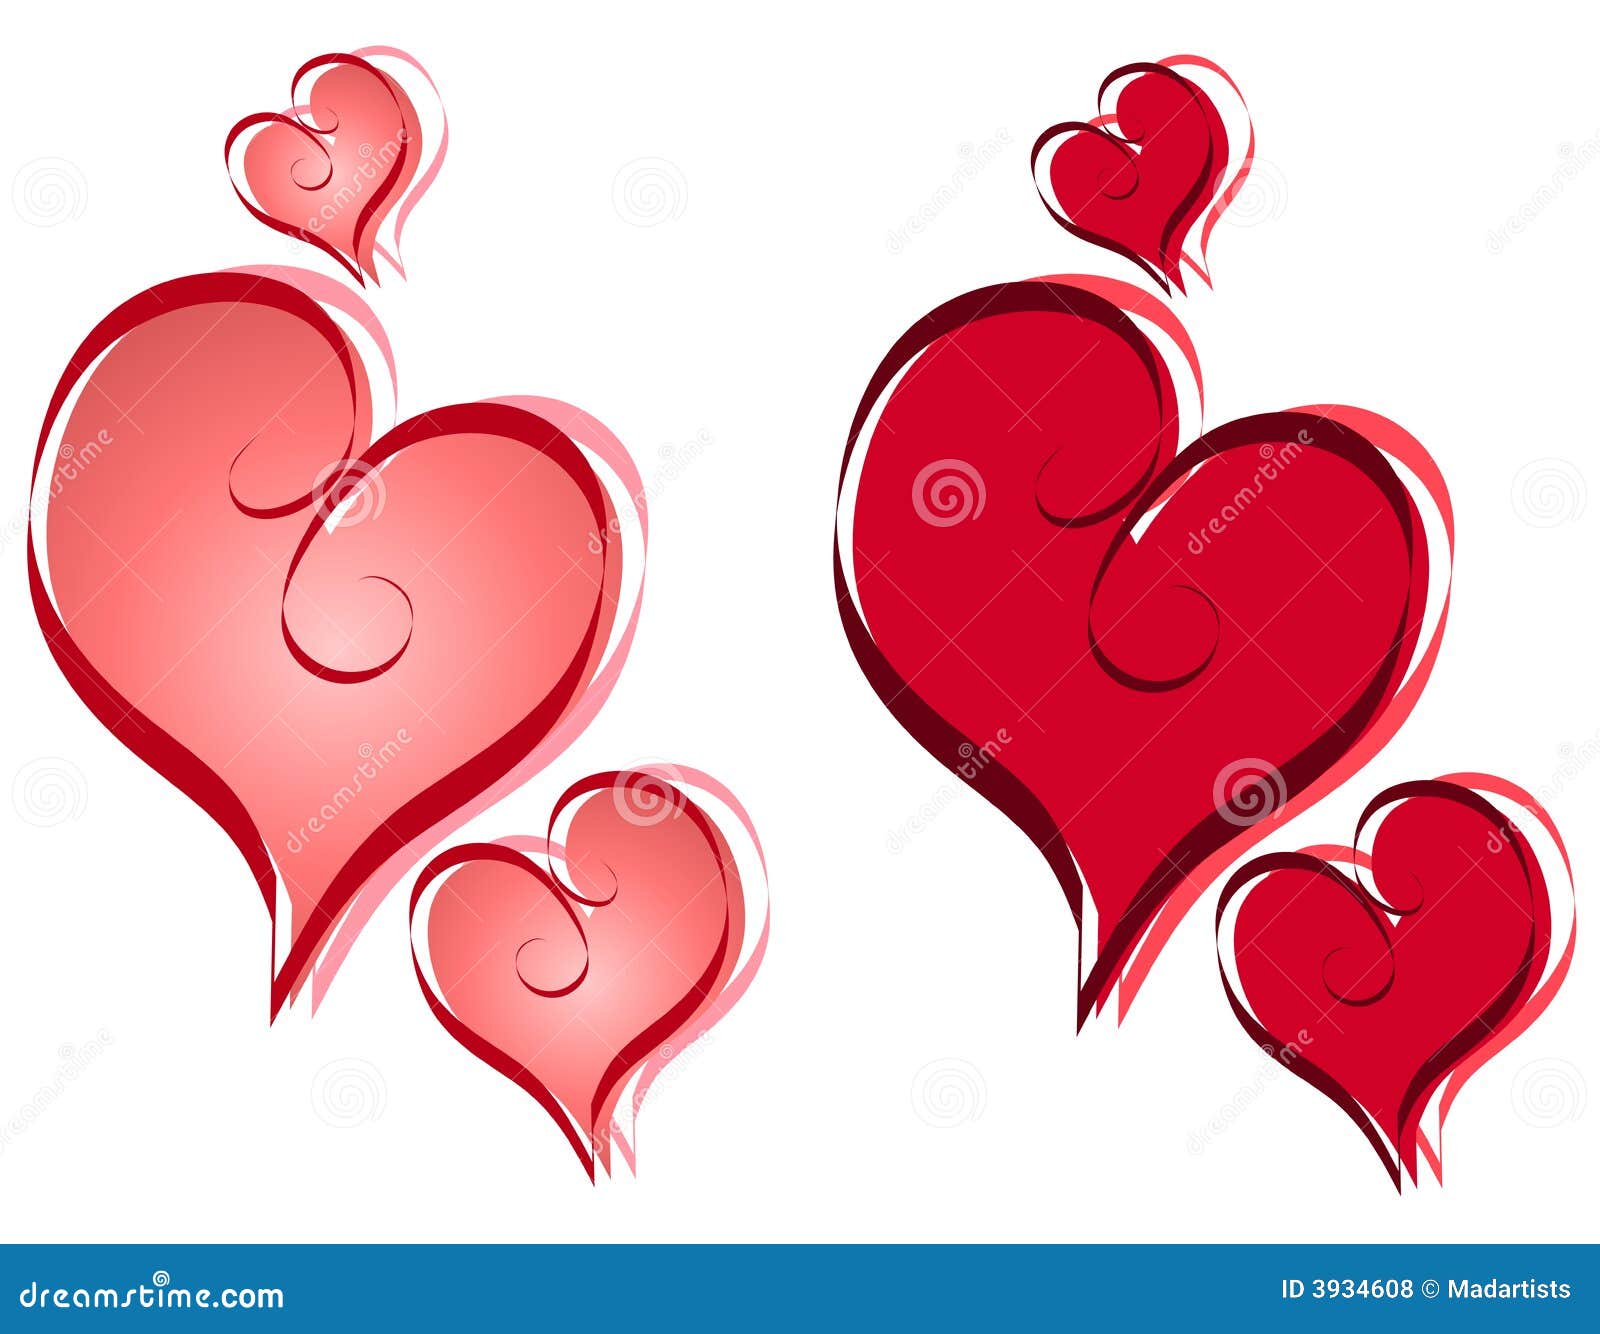 valentines day hearts clip art free - photo #38